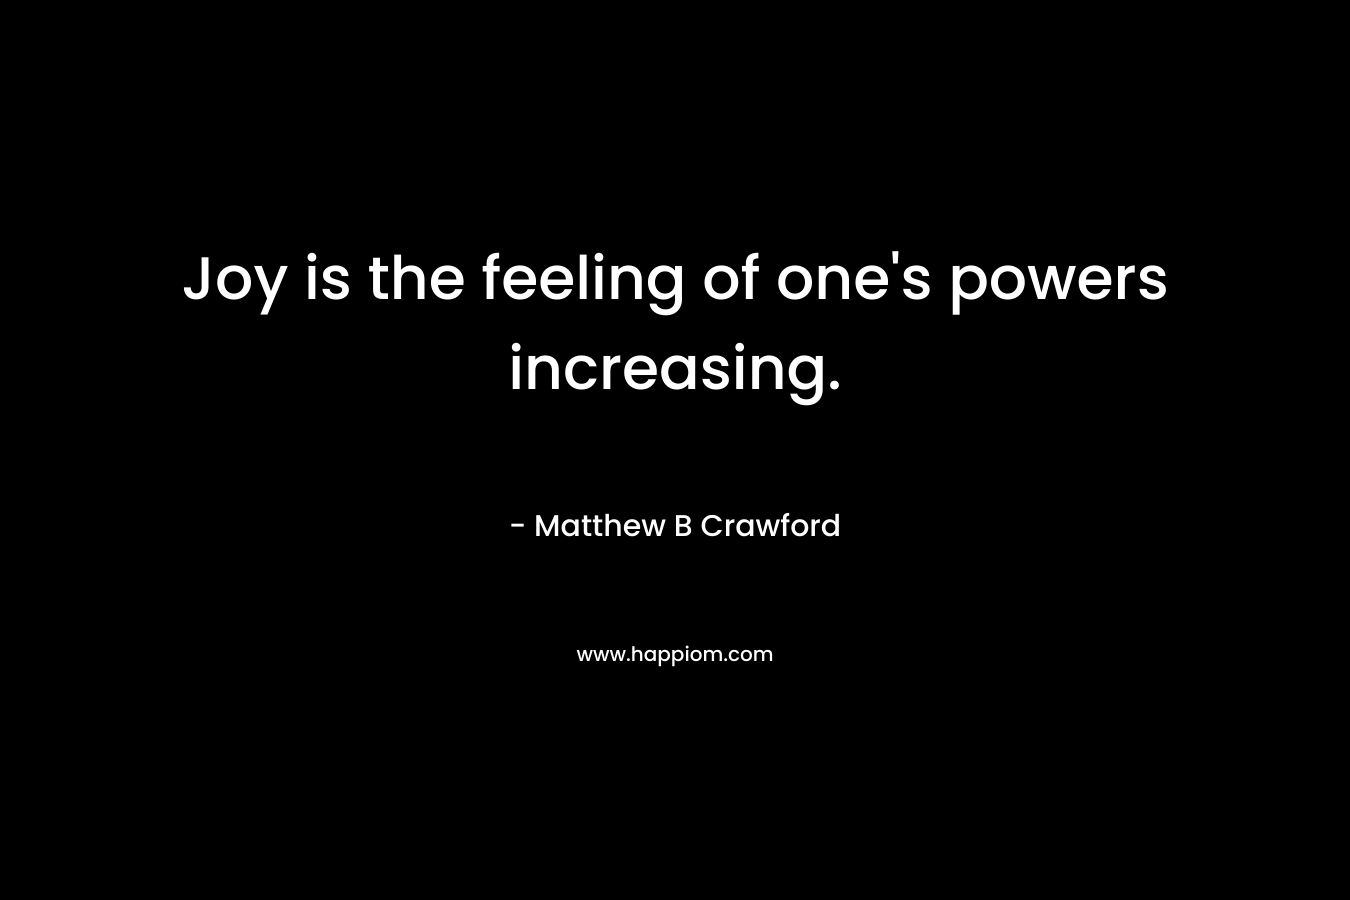 Joy is the feeling of one's powers increasing.